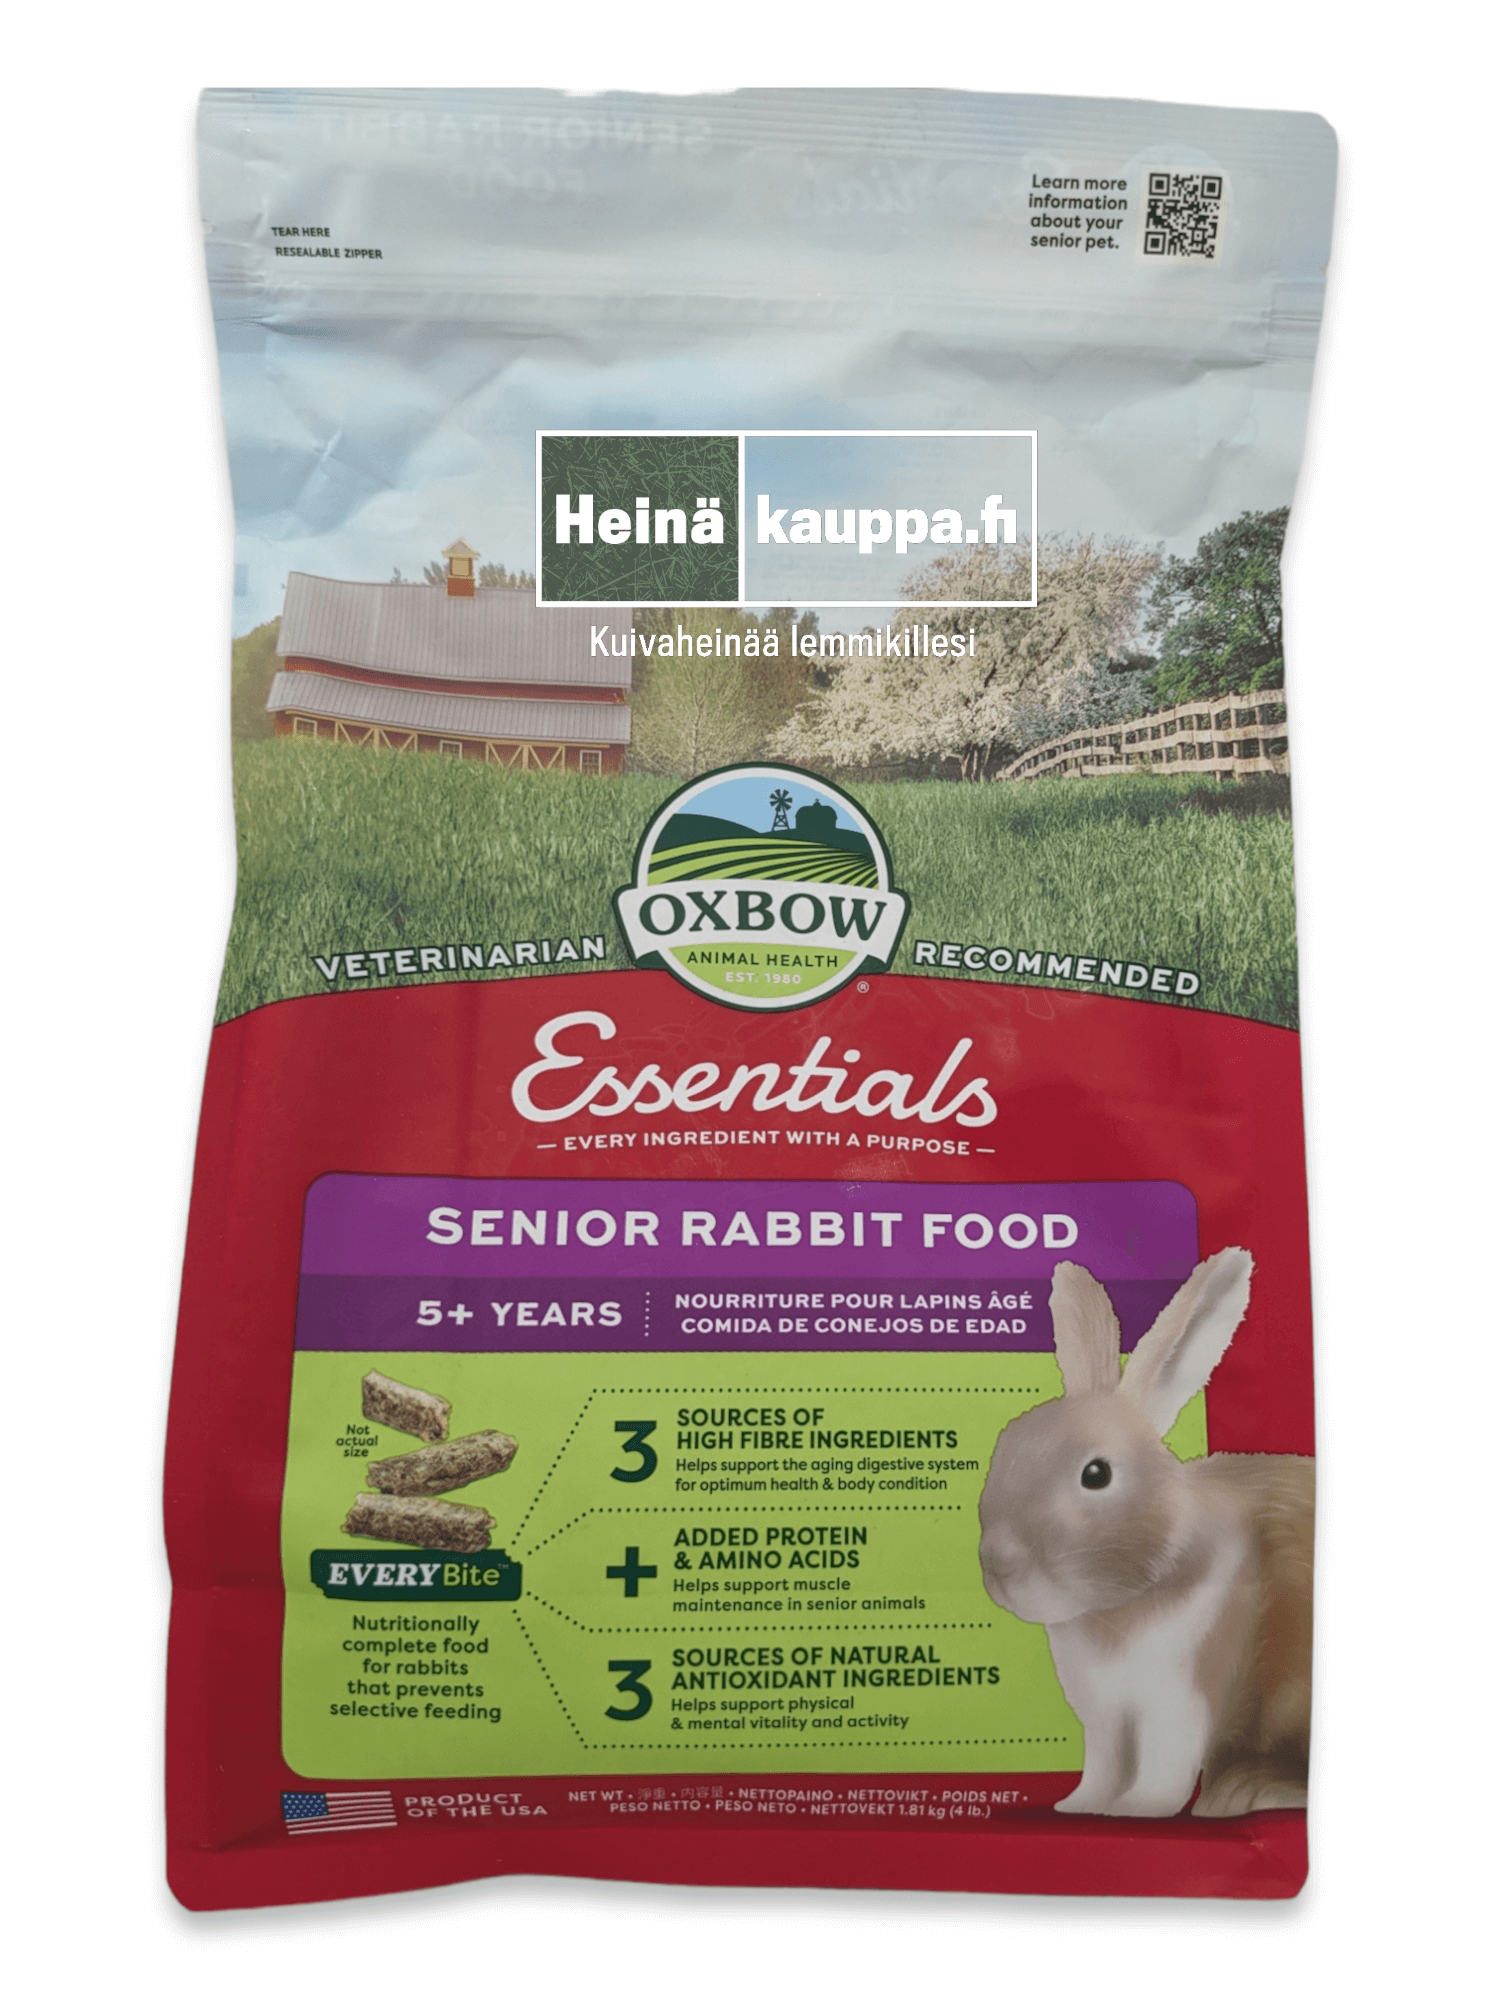 Oxbow essentials Senior rabbit food